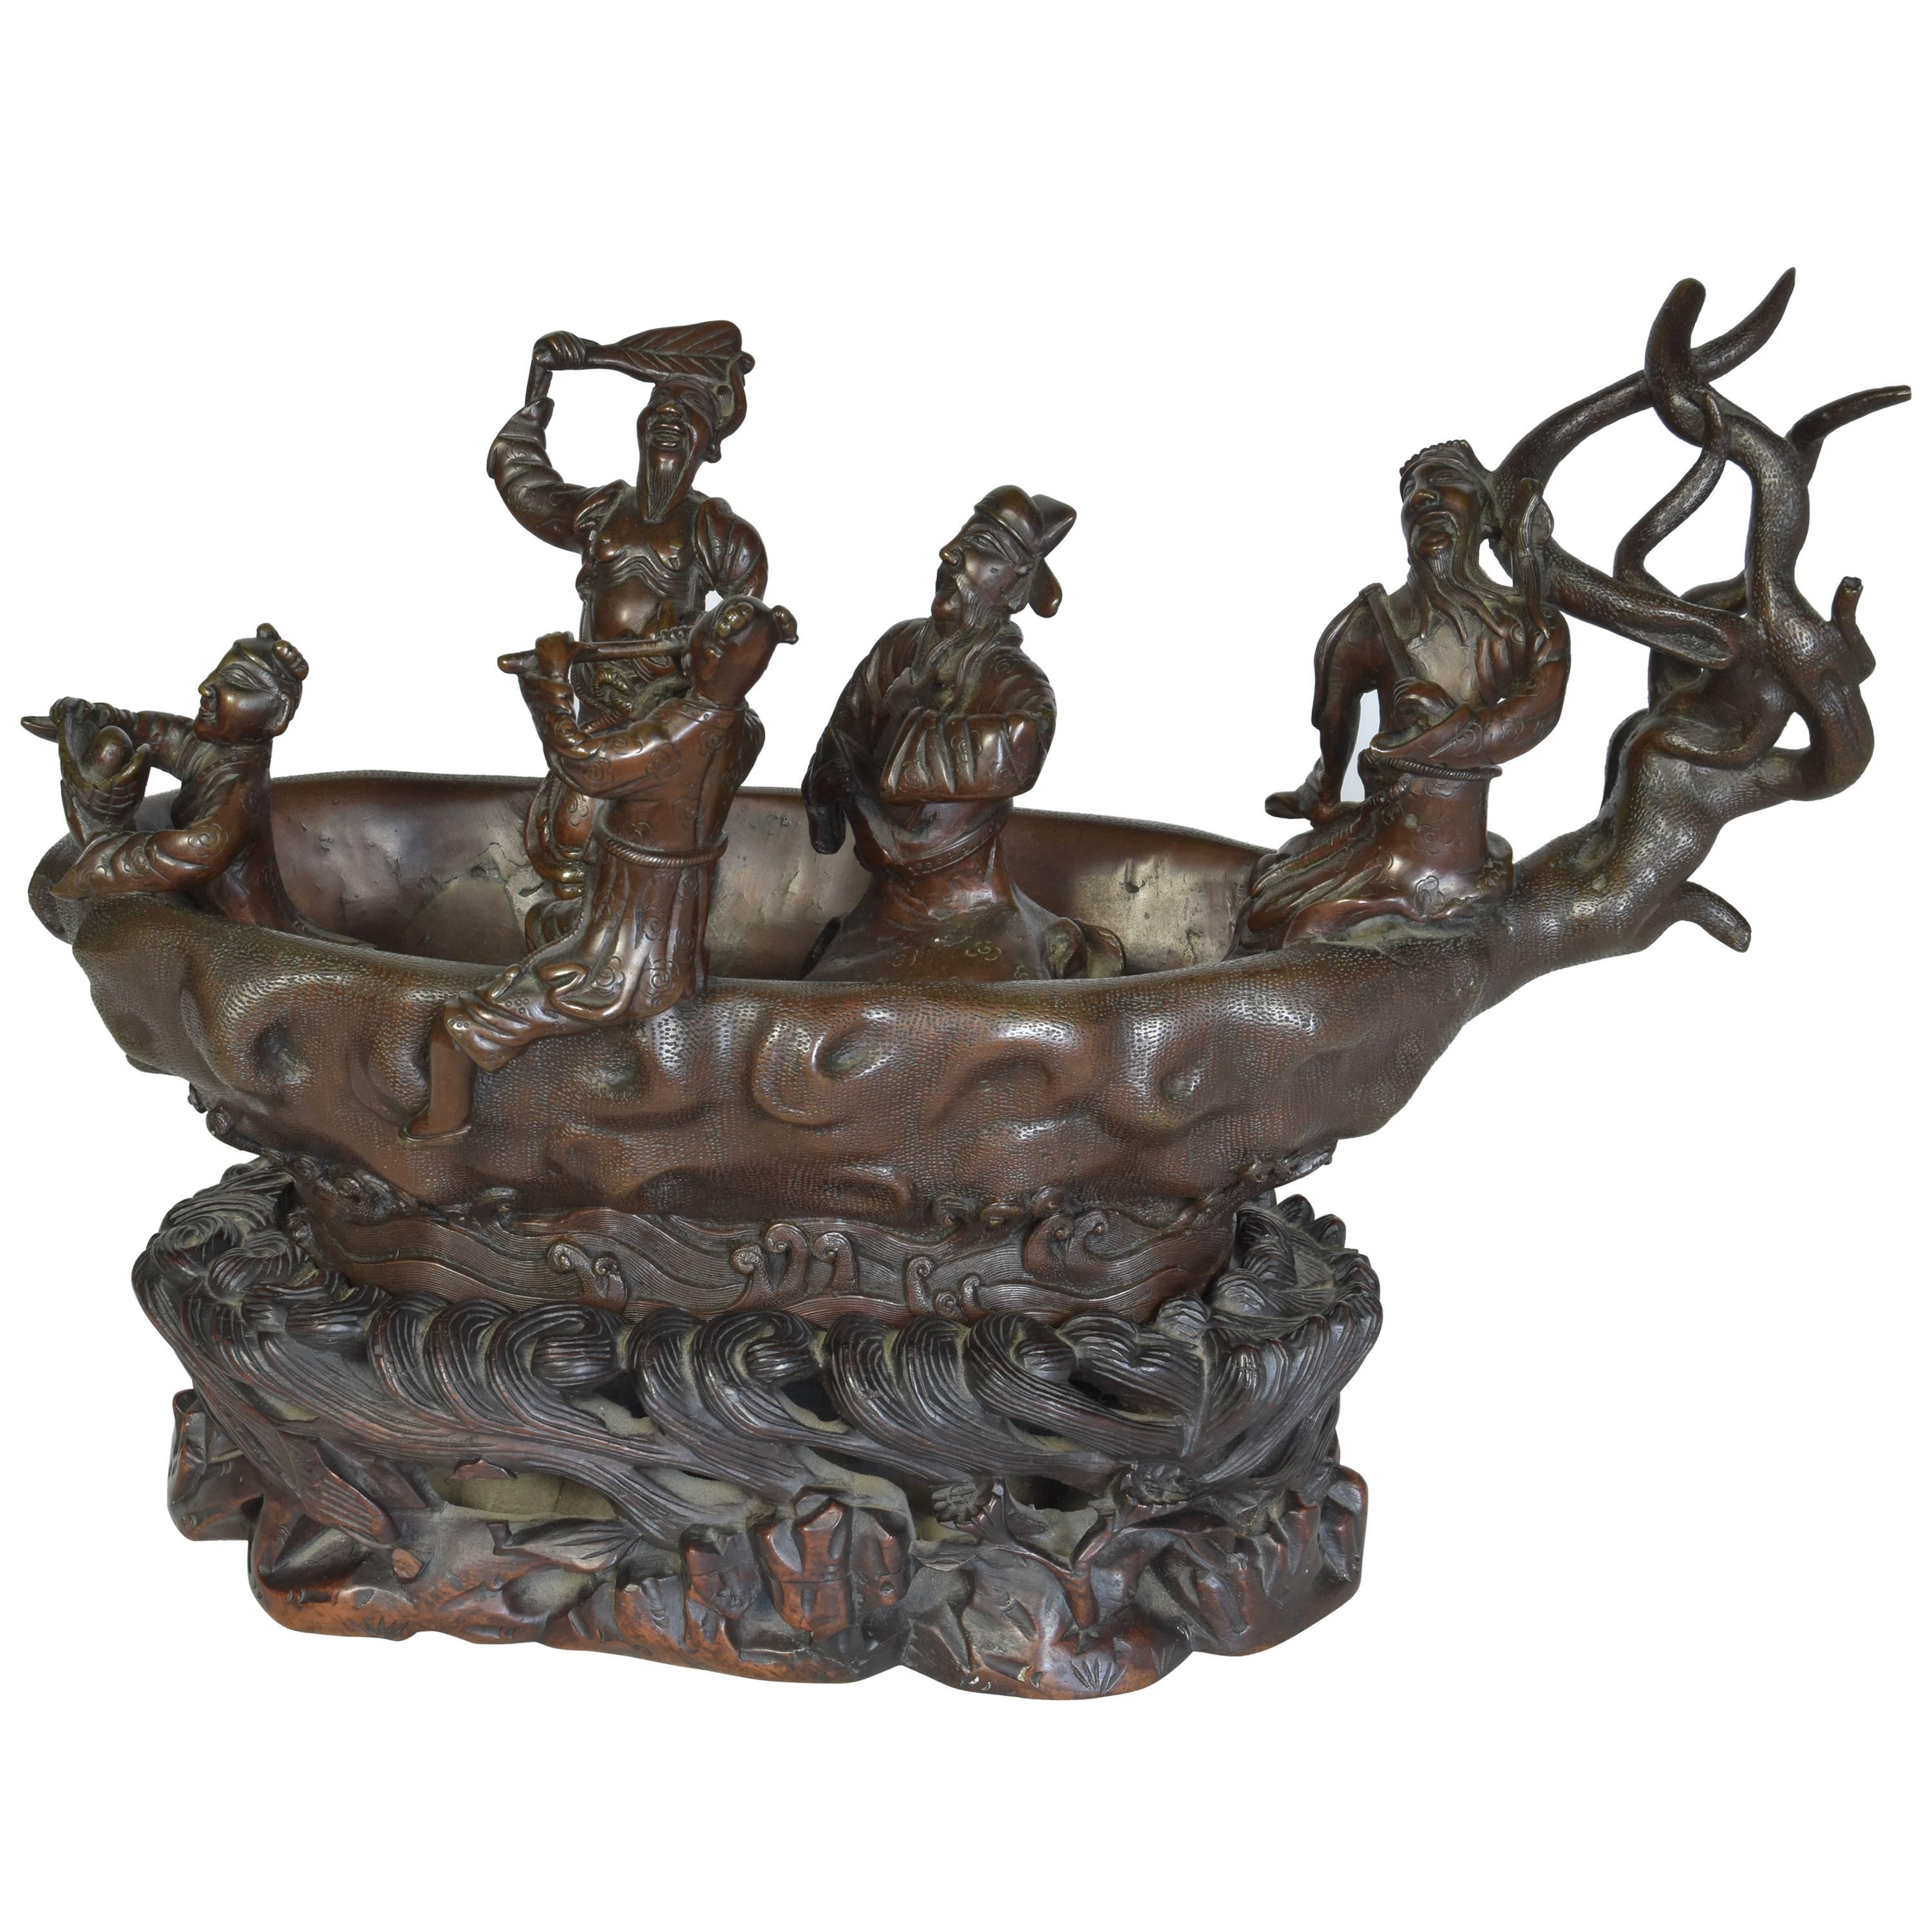 Cast Bronze Sculpture of Men in a Boat on a Carved Wooden Base, Signed For Sale